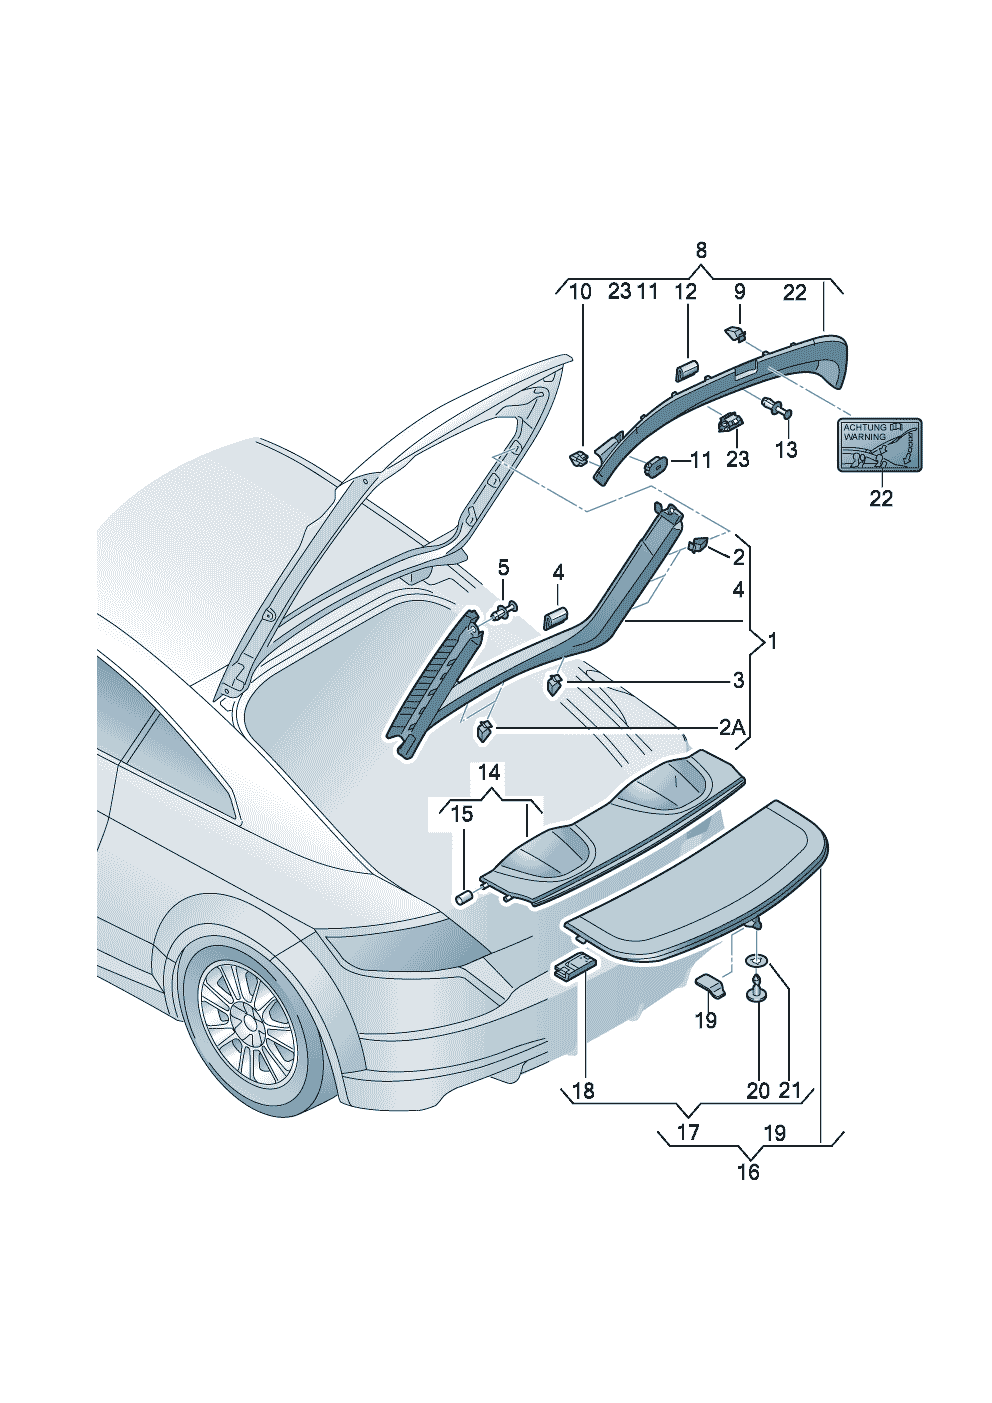 HeckklappenverkleidungDeckel für Kofferraumab-<br>deckung  - Audi TT/TTS Coupe/Roadster - att